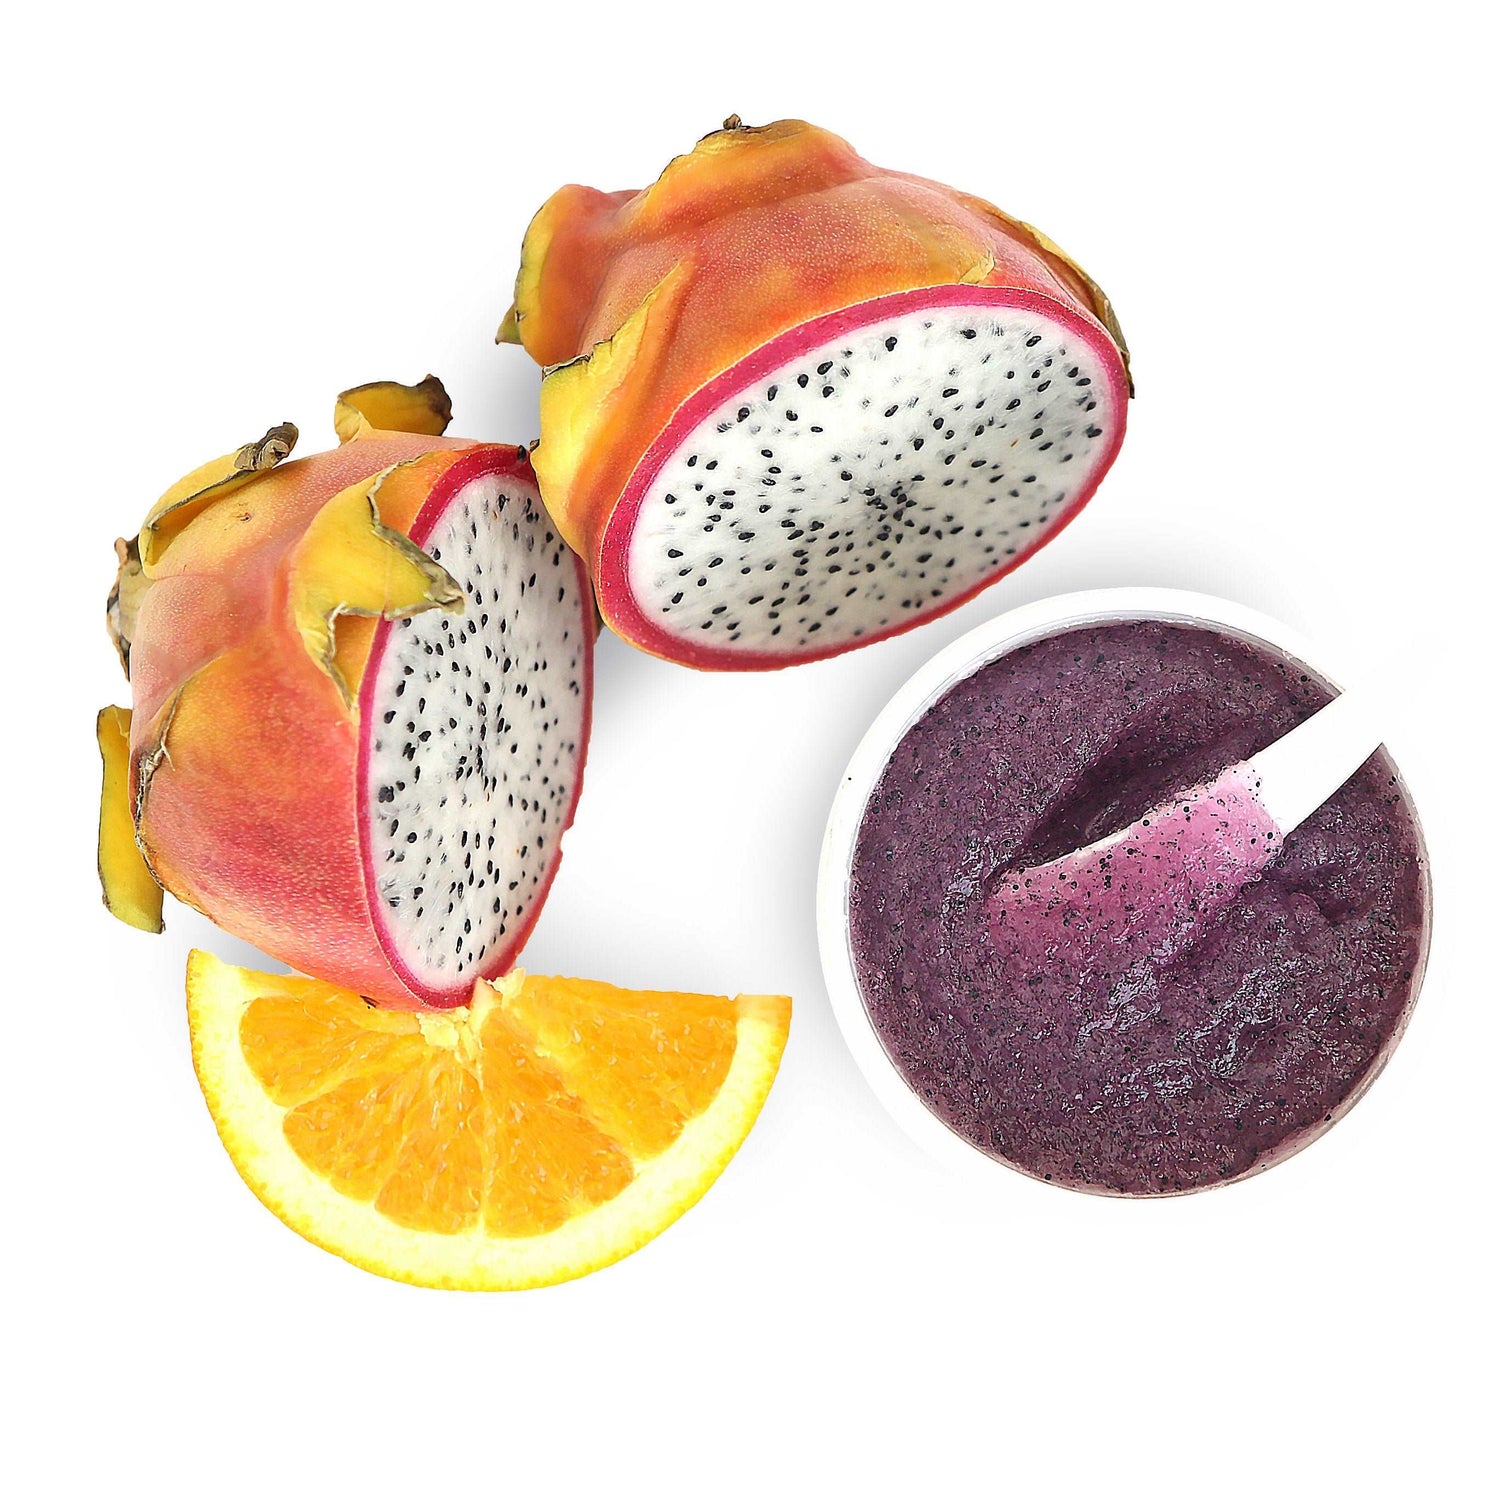 Pitaya + Vit C Jelly Body Scrub- Pitaya is a rich source of multiple Antioxidants including phenolic compounds and Vitamin C